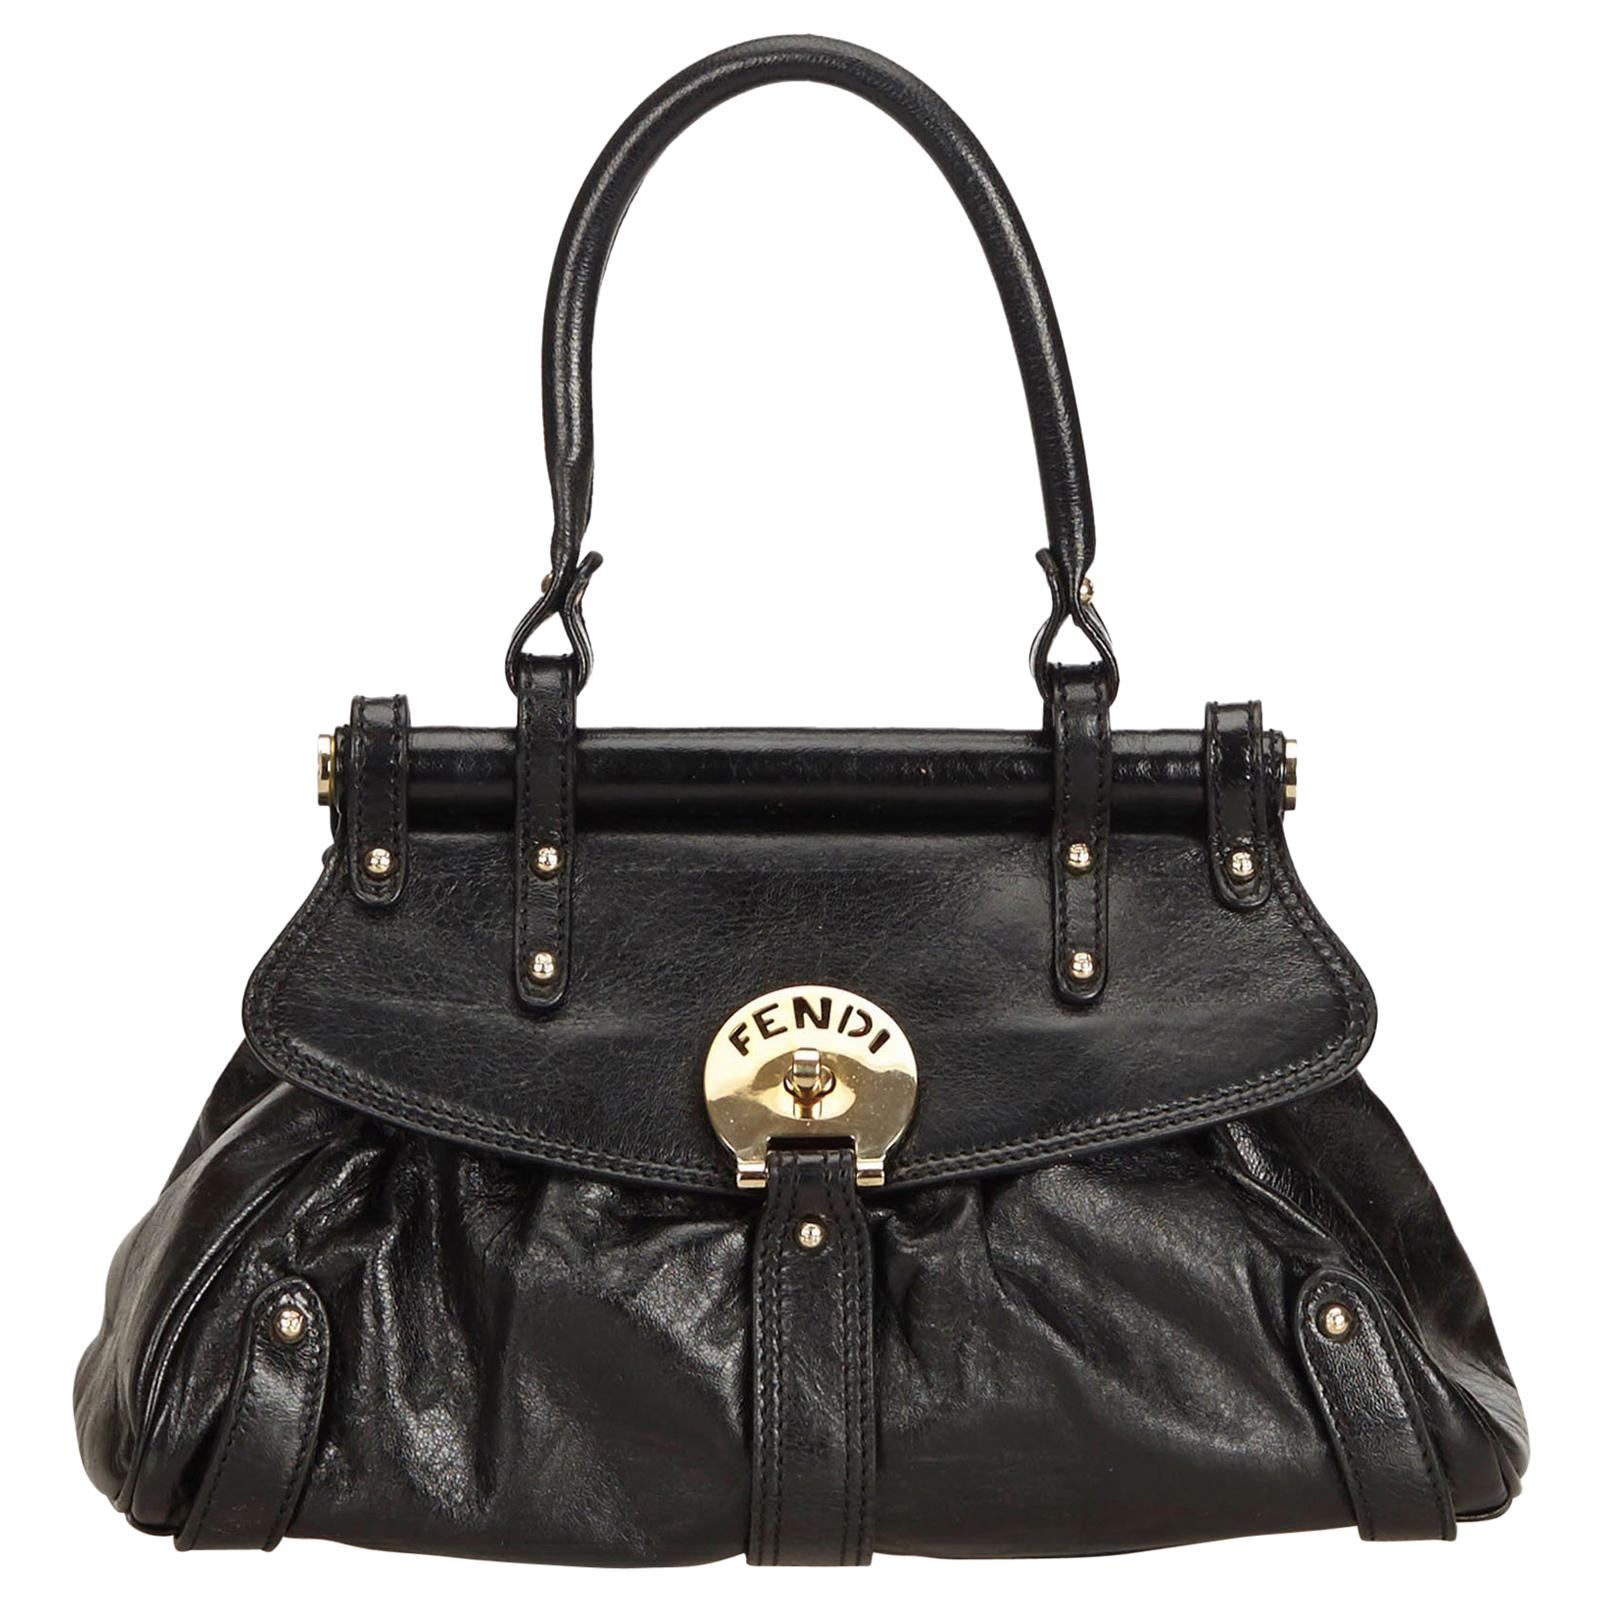 Fendi Black Leather Handbag For Sale